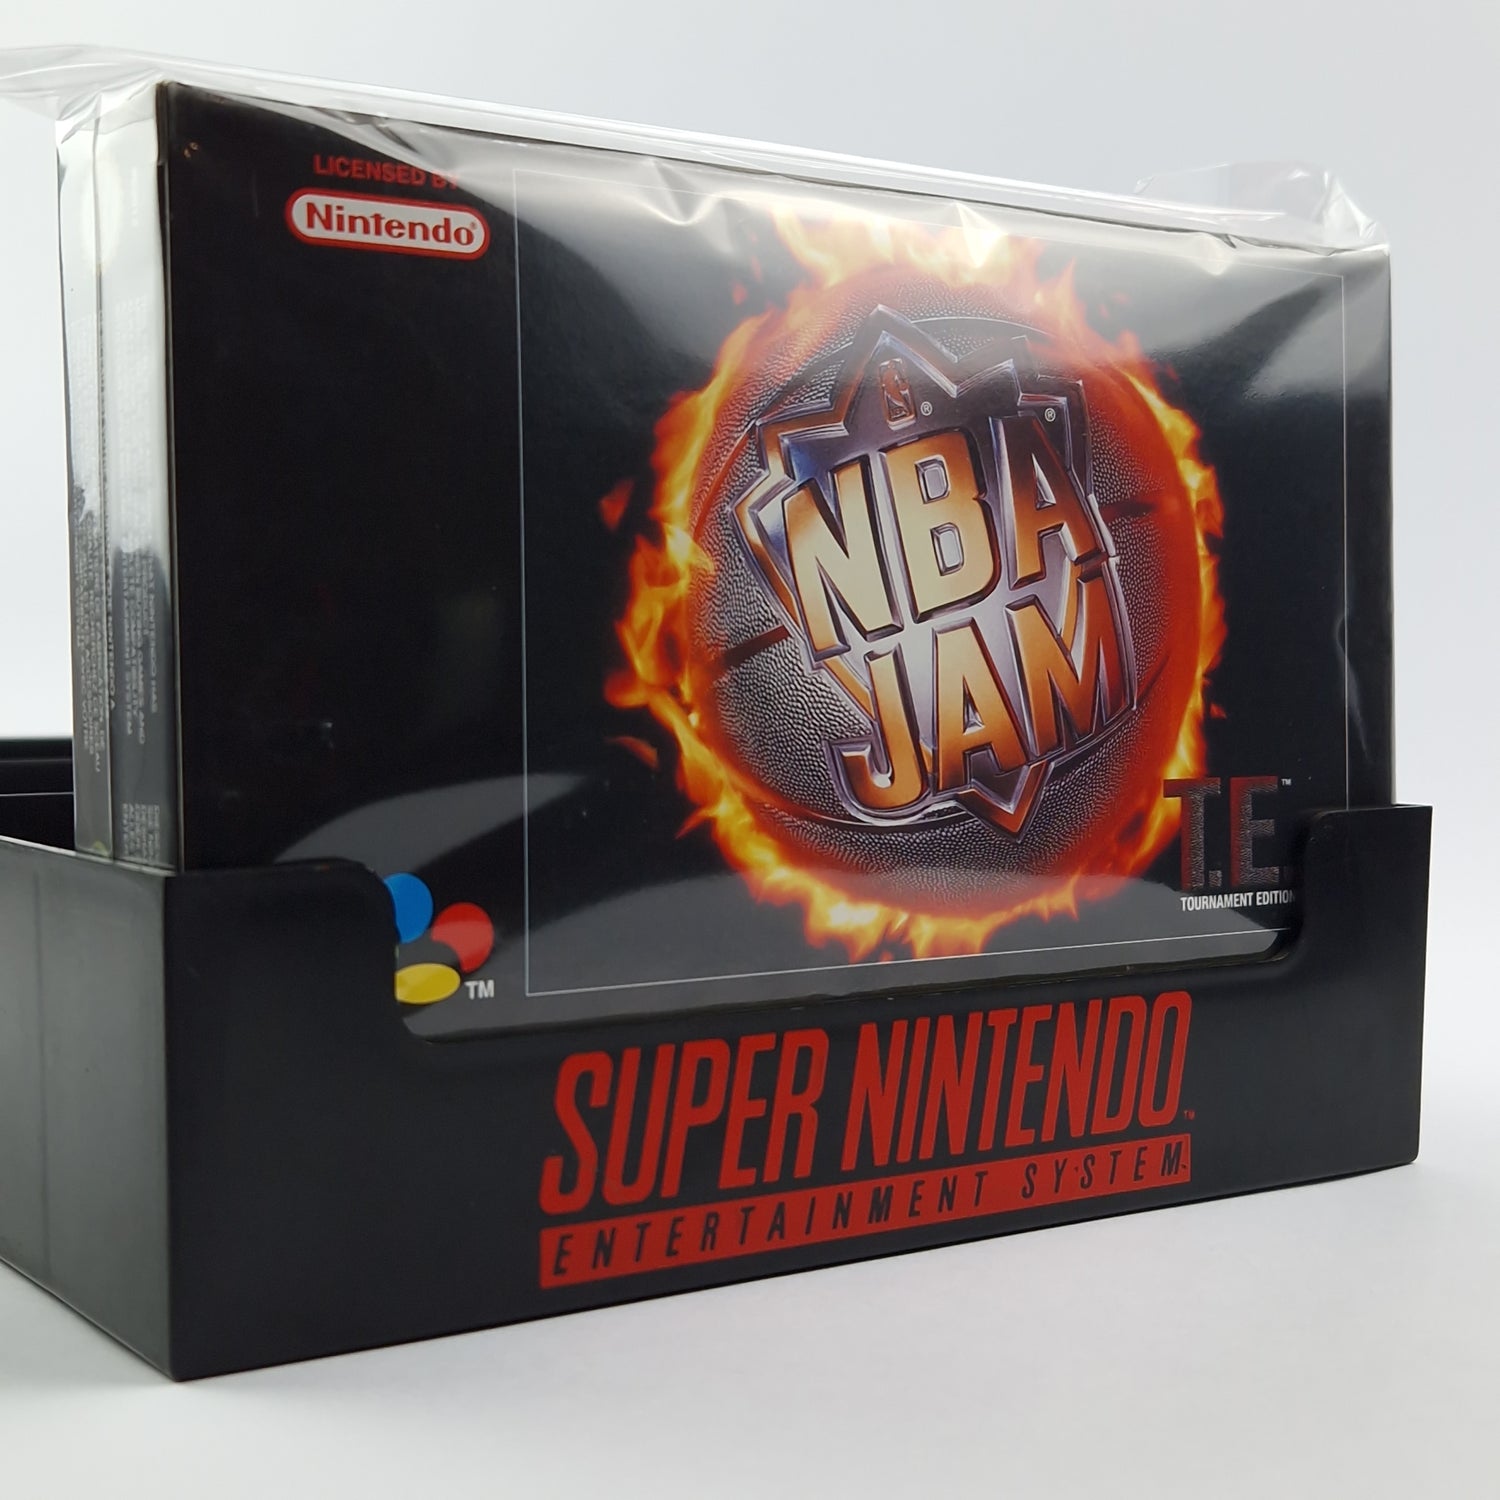 Super Nintendo Game: NBA JAM TE Tournament Edition - SNES cib OVP PAL EUR